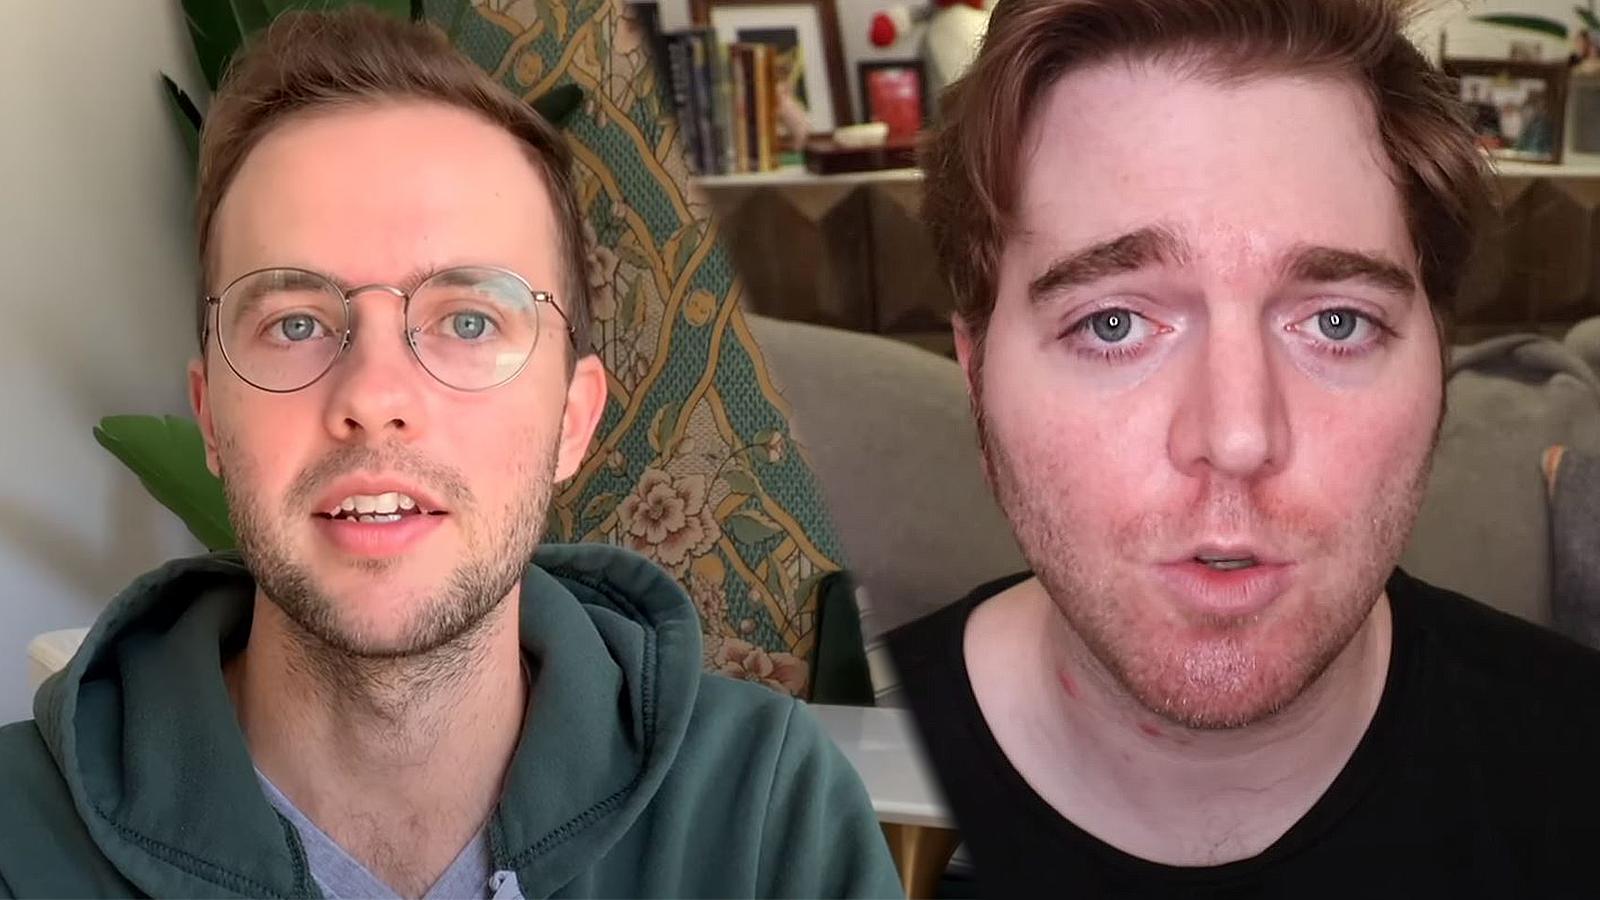 YouTubers Ryland Adams and Shane Dawson speak to their audiences.